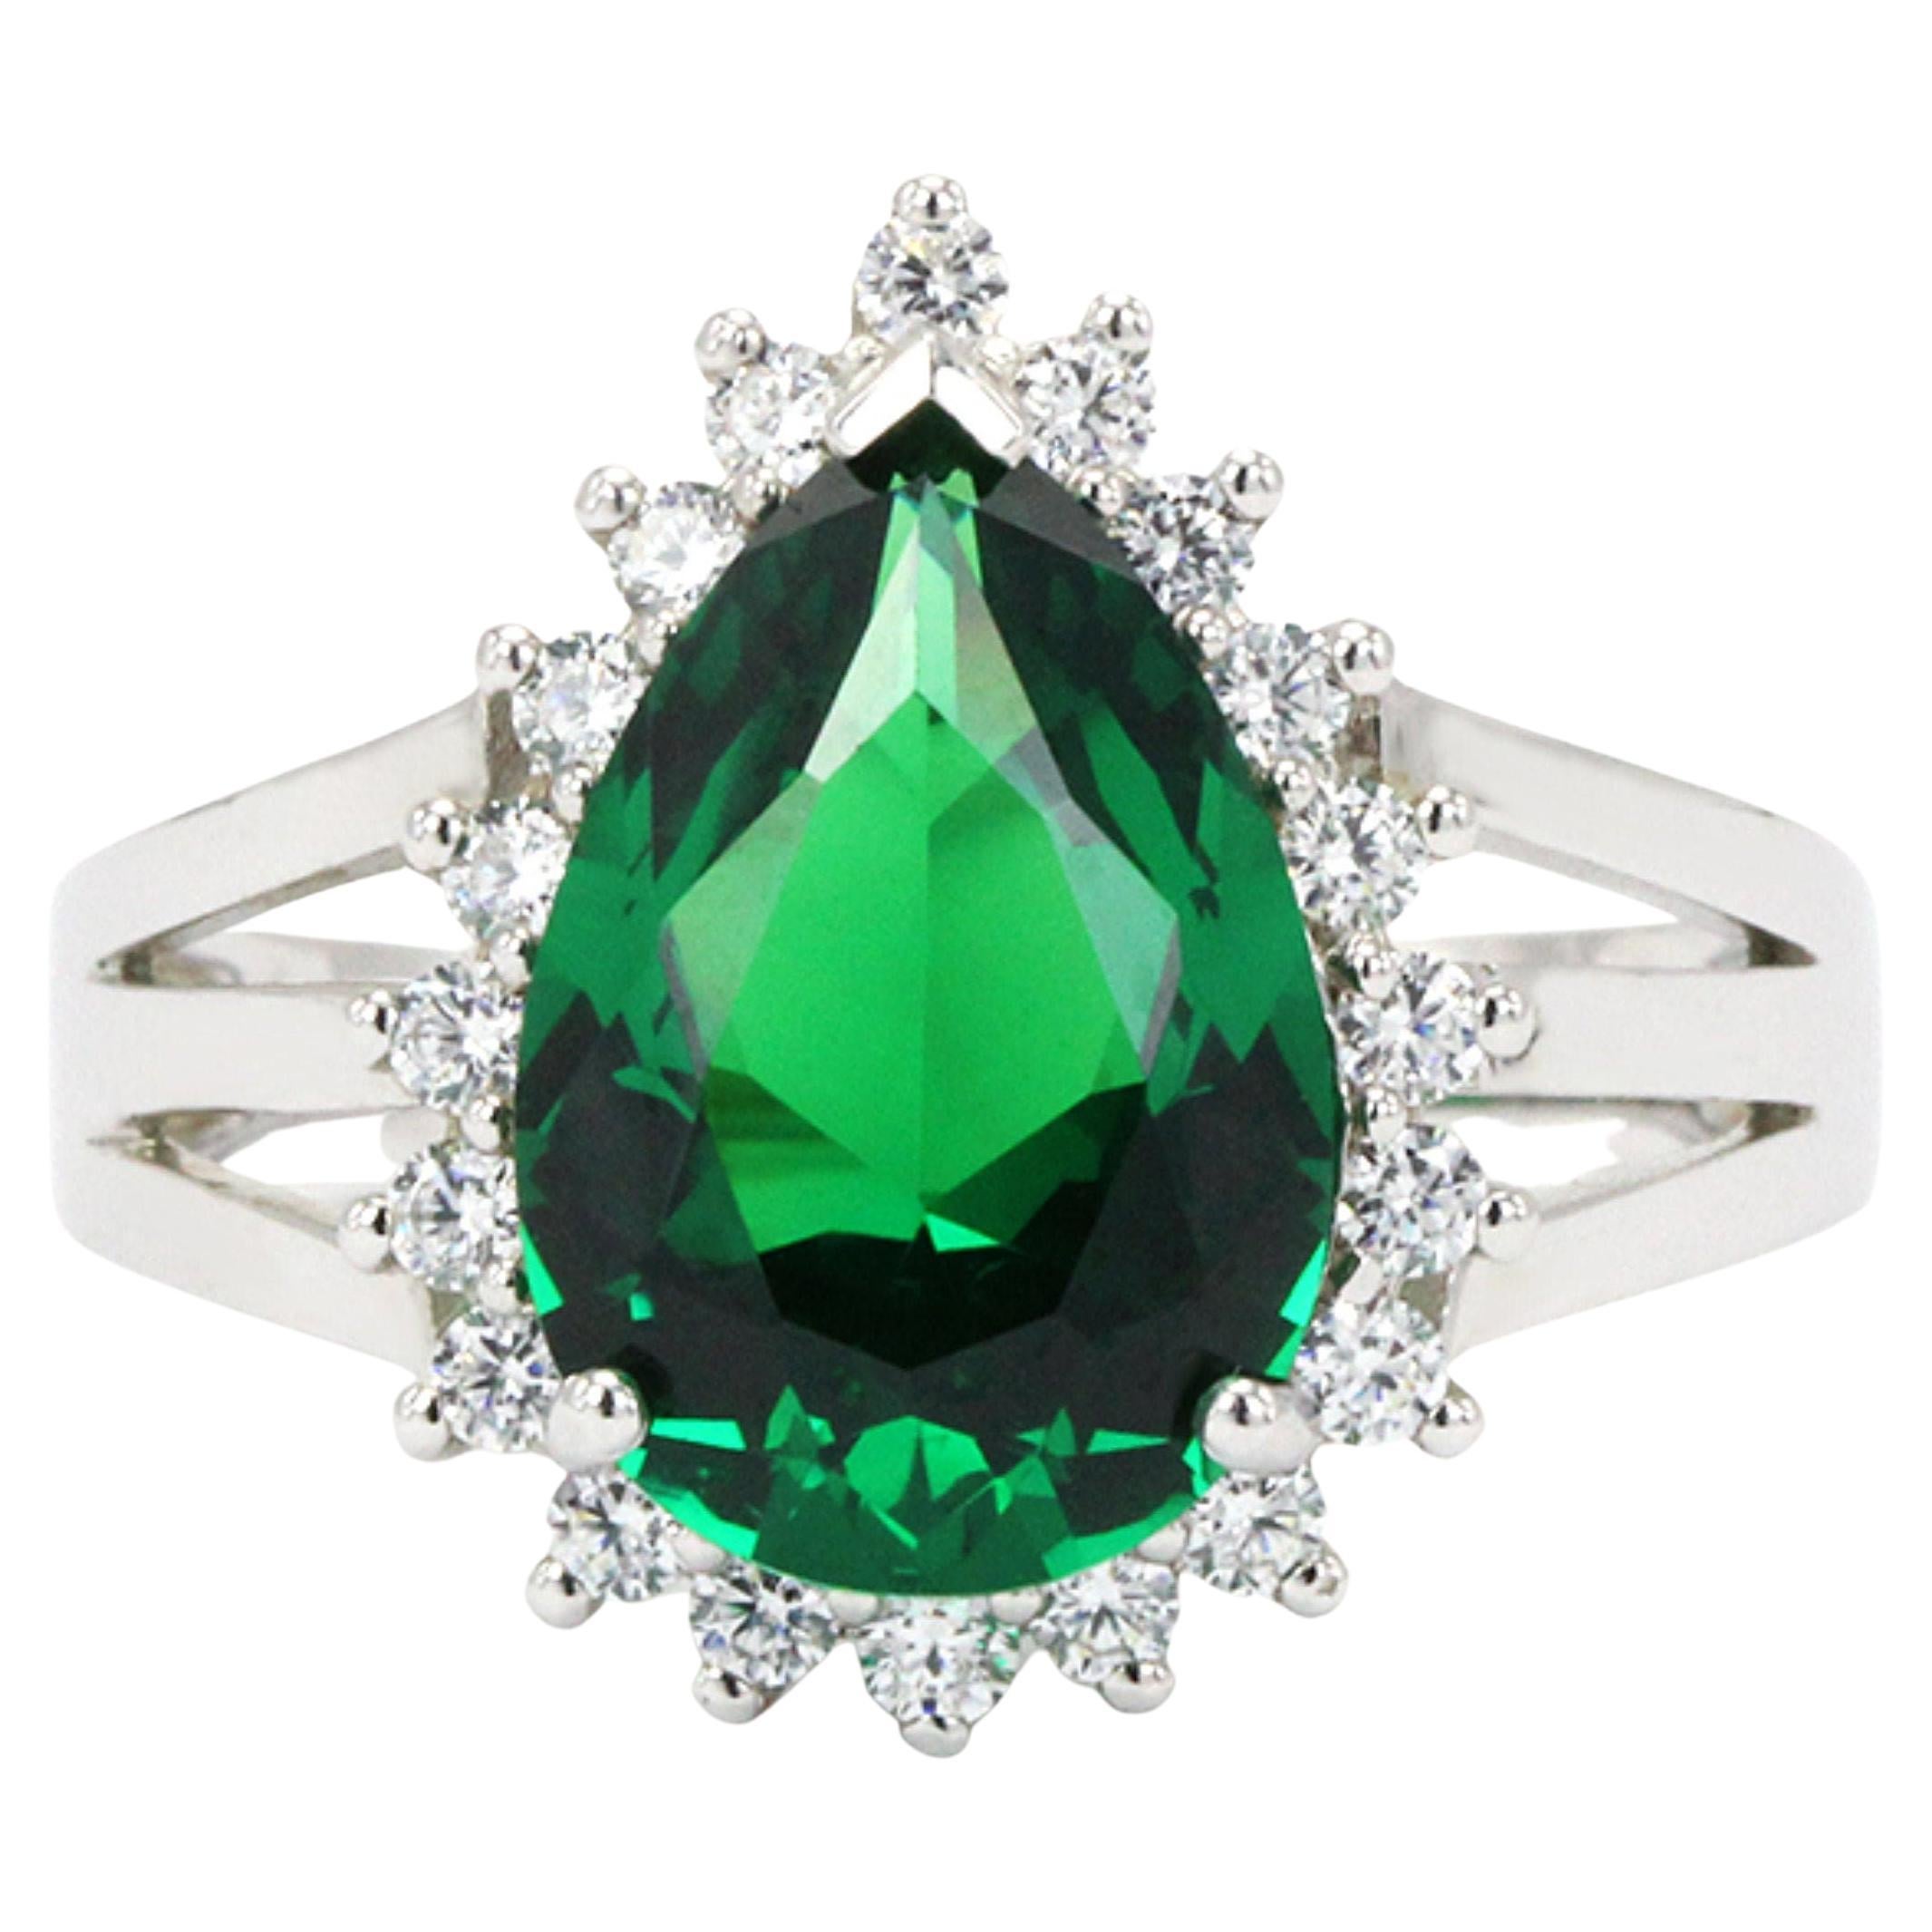 Certified 4 Carat Pear Cut Emerald Engagement Ring Art Deco Diamond Wedding Ring